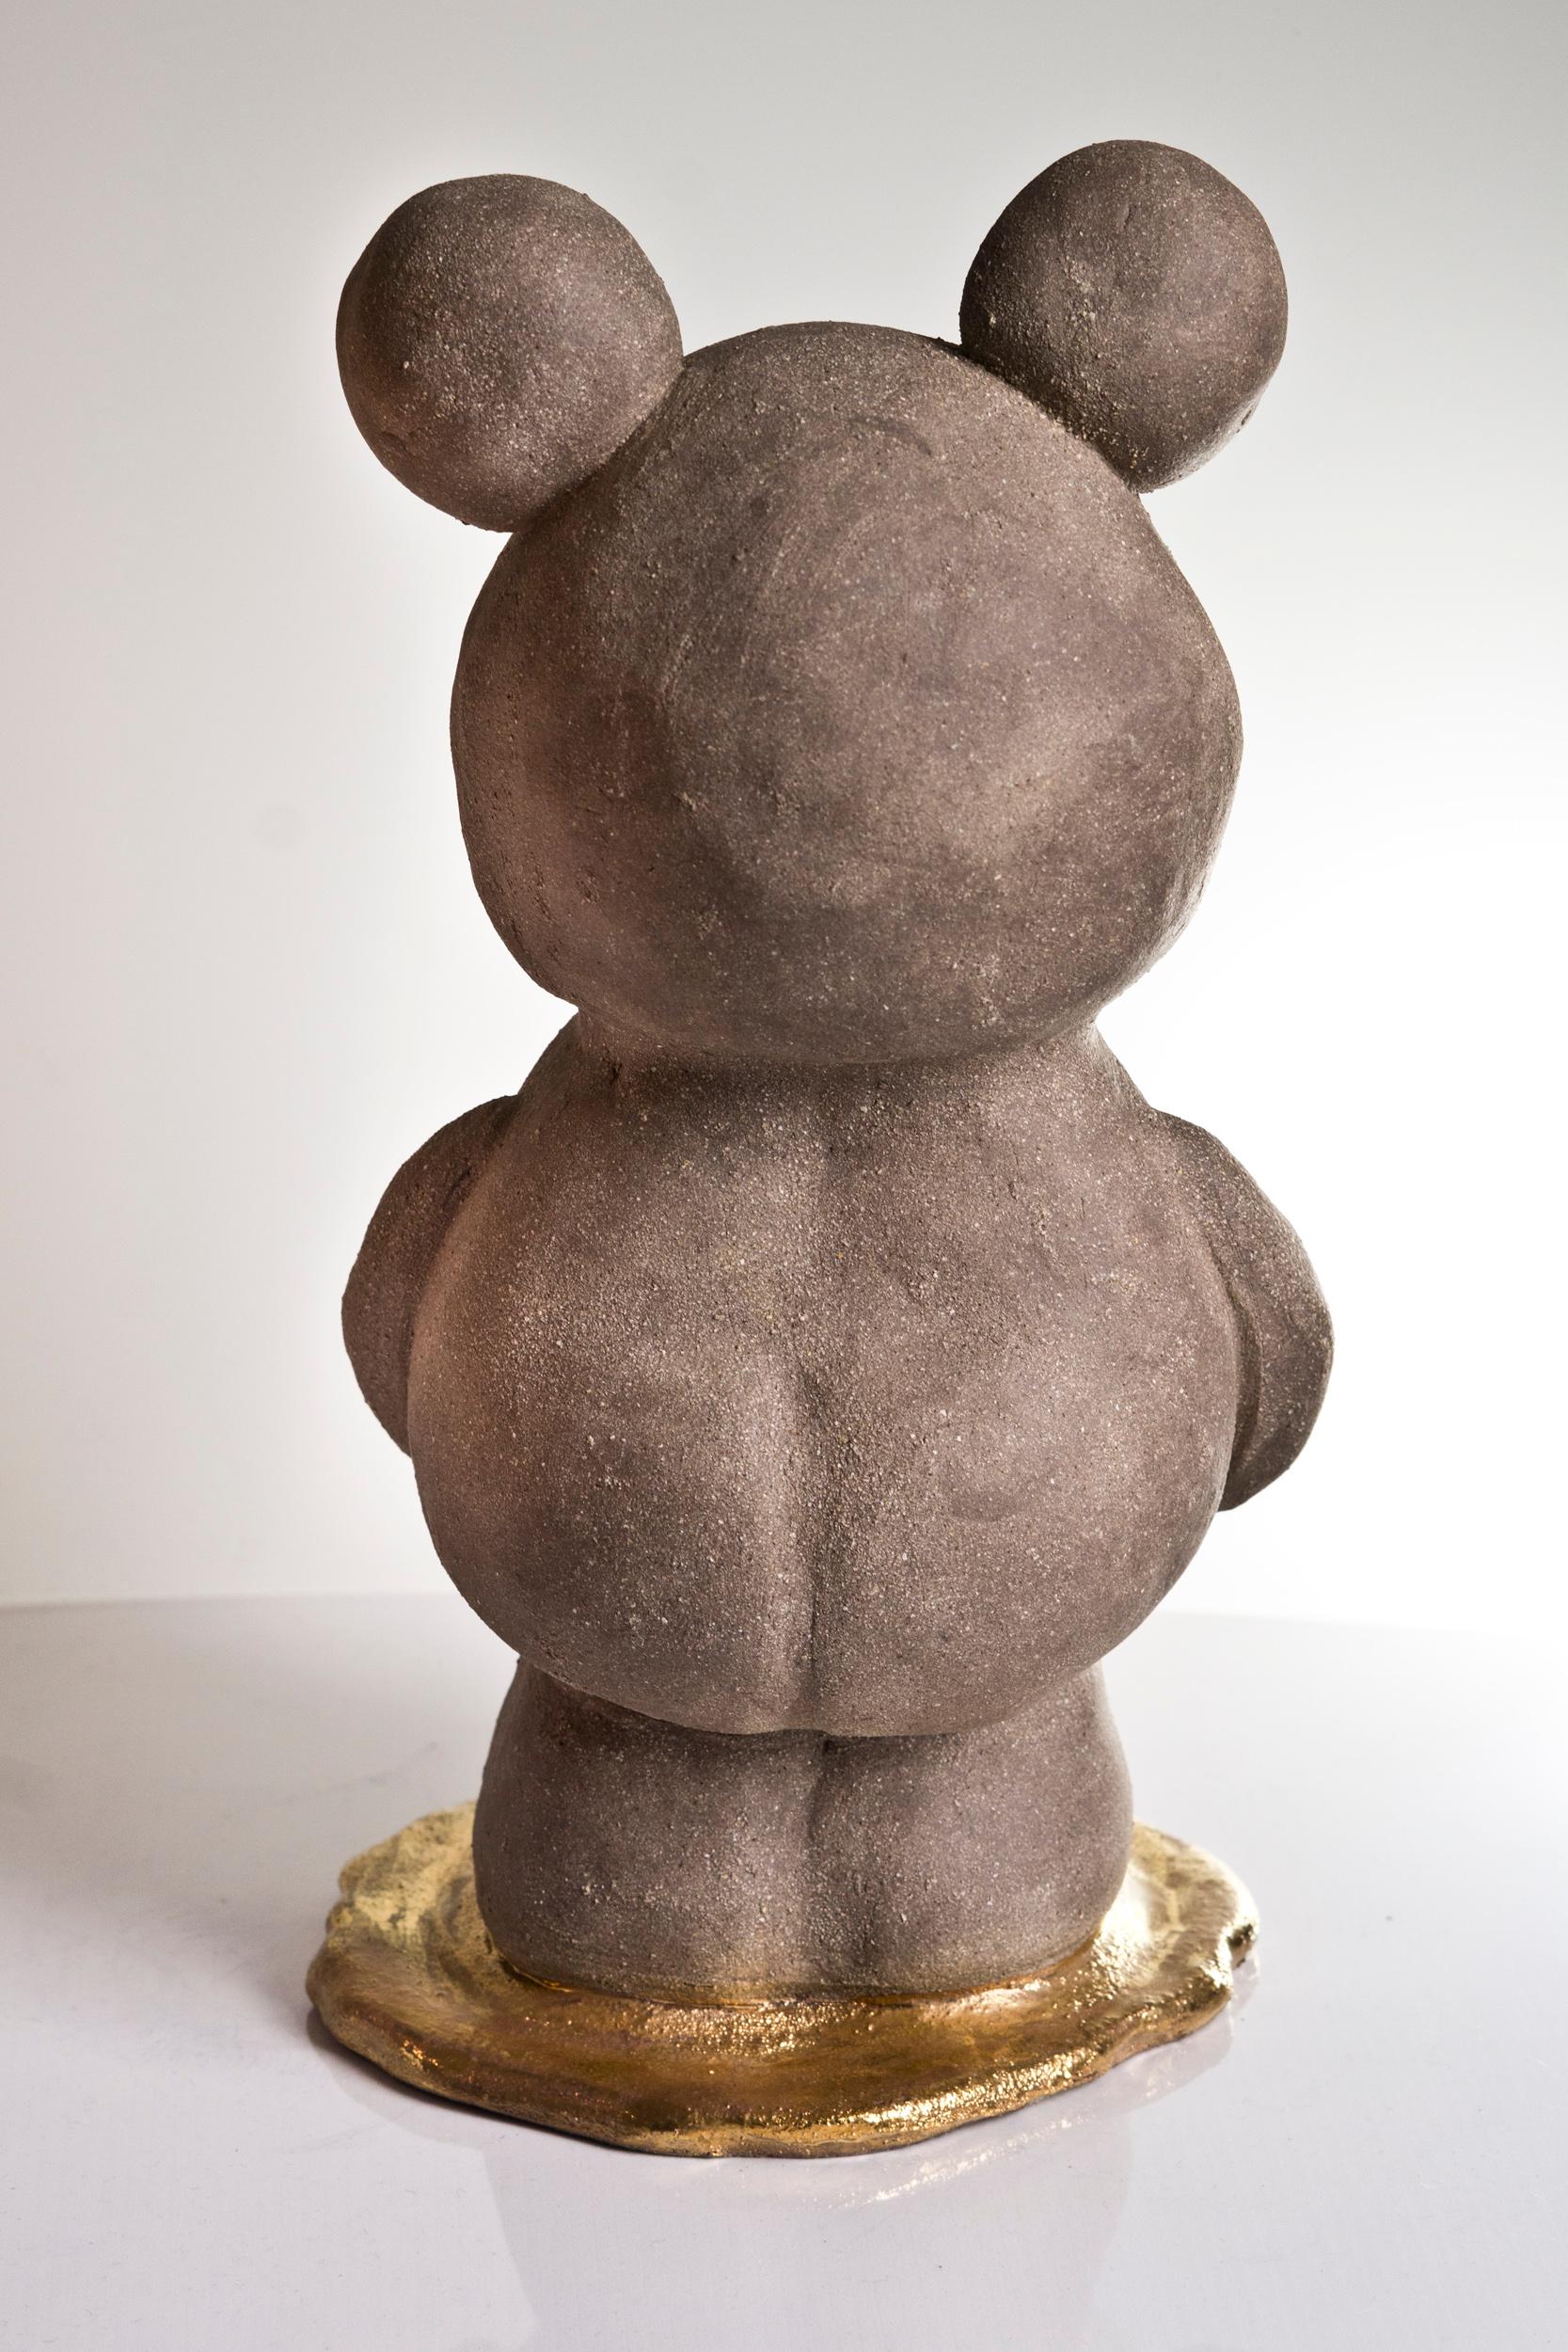 The Crying Teddy - Modern Sculpture by Agustina Garrigou